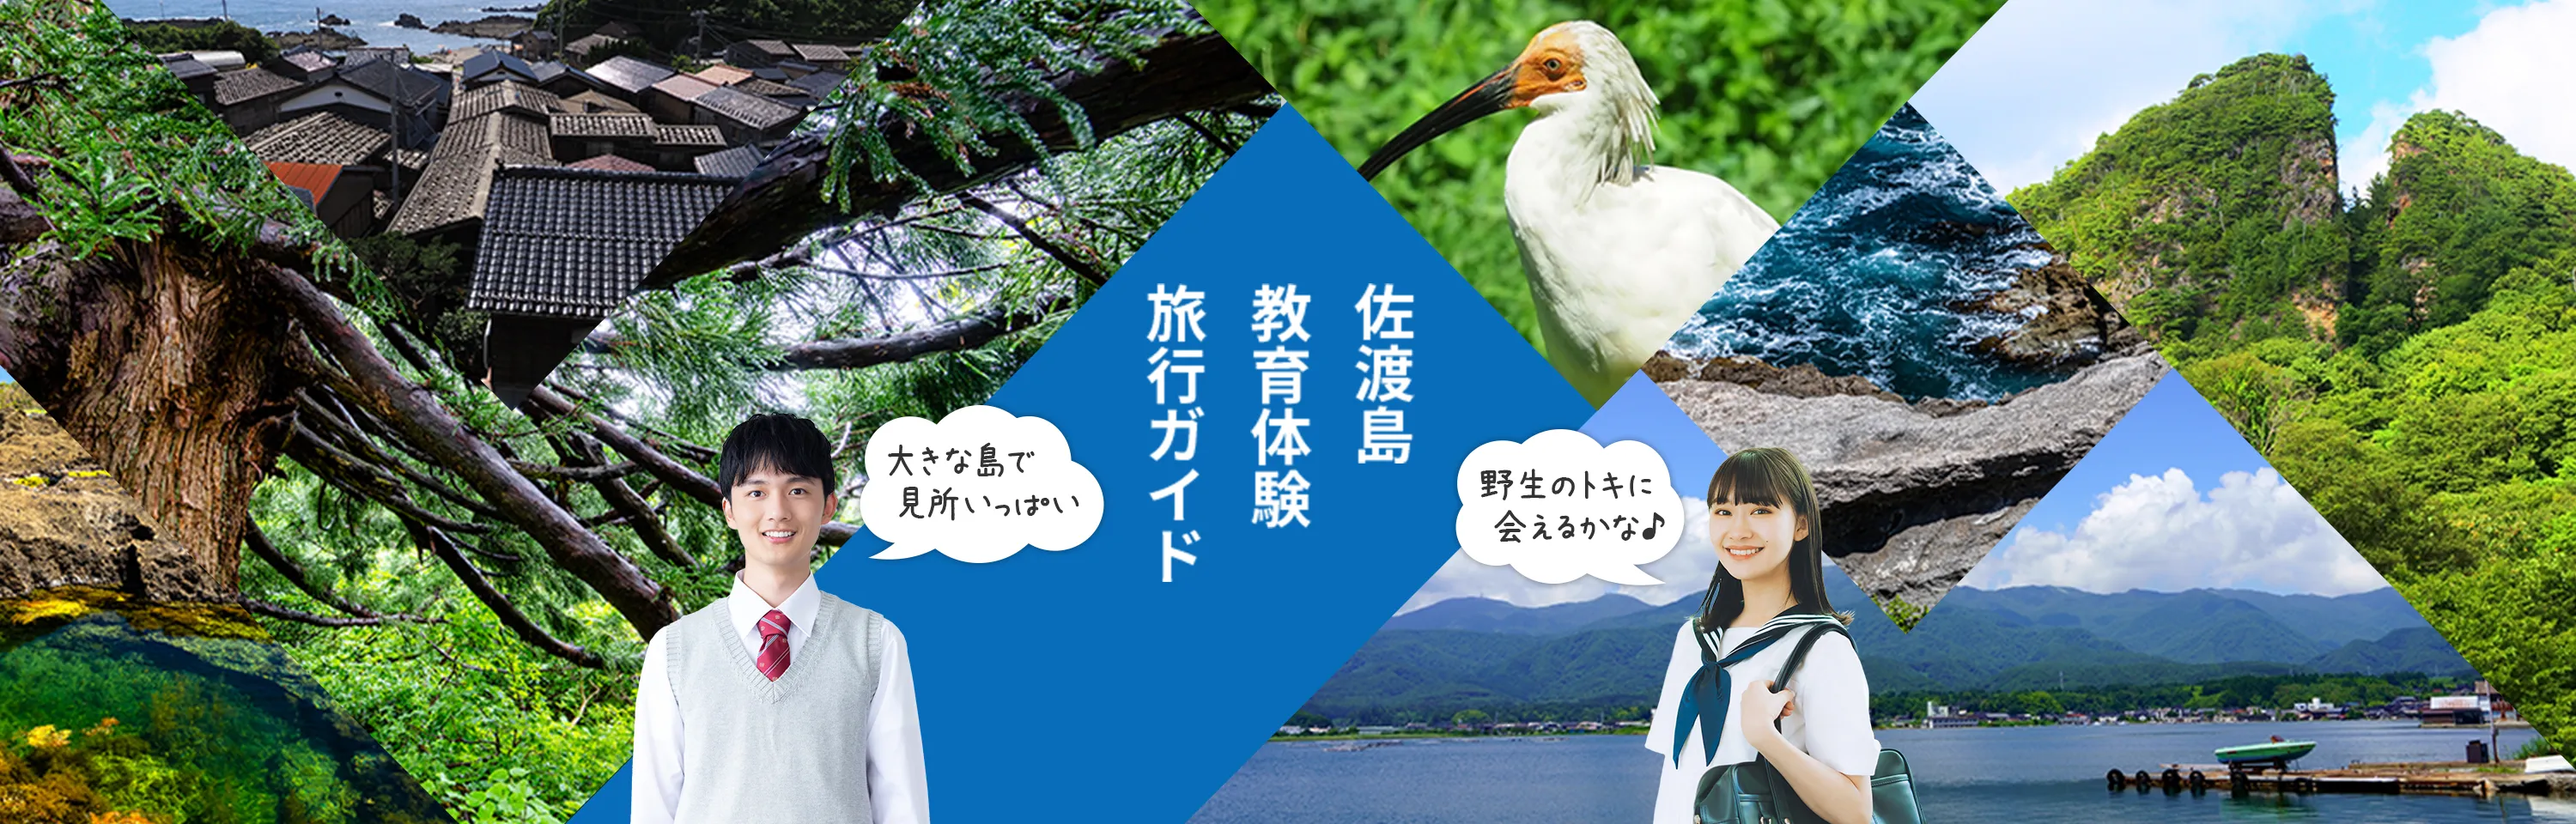 佐渡島 教育体験 旅行ガイド